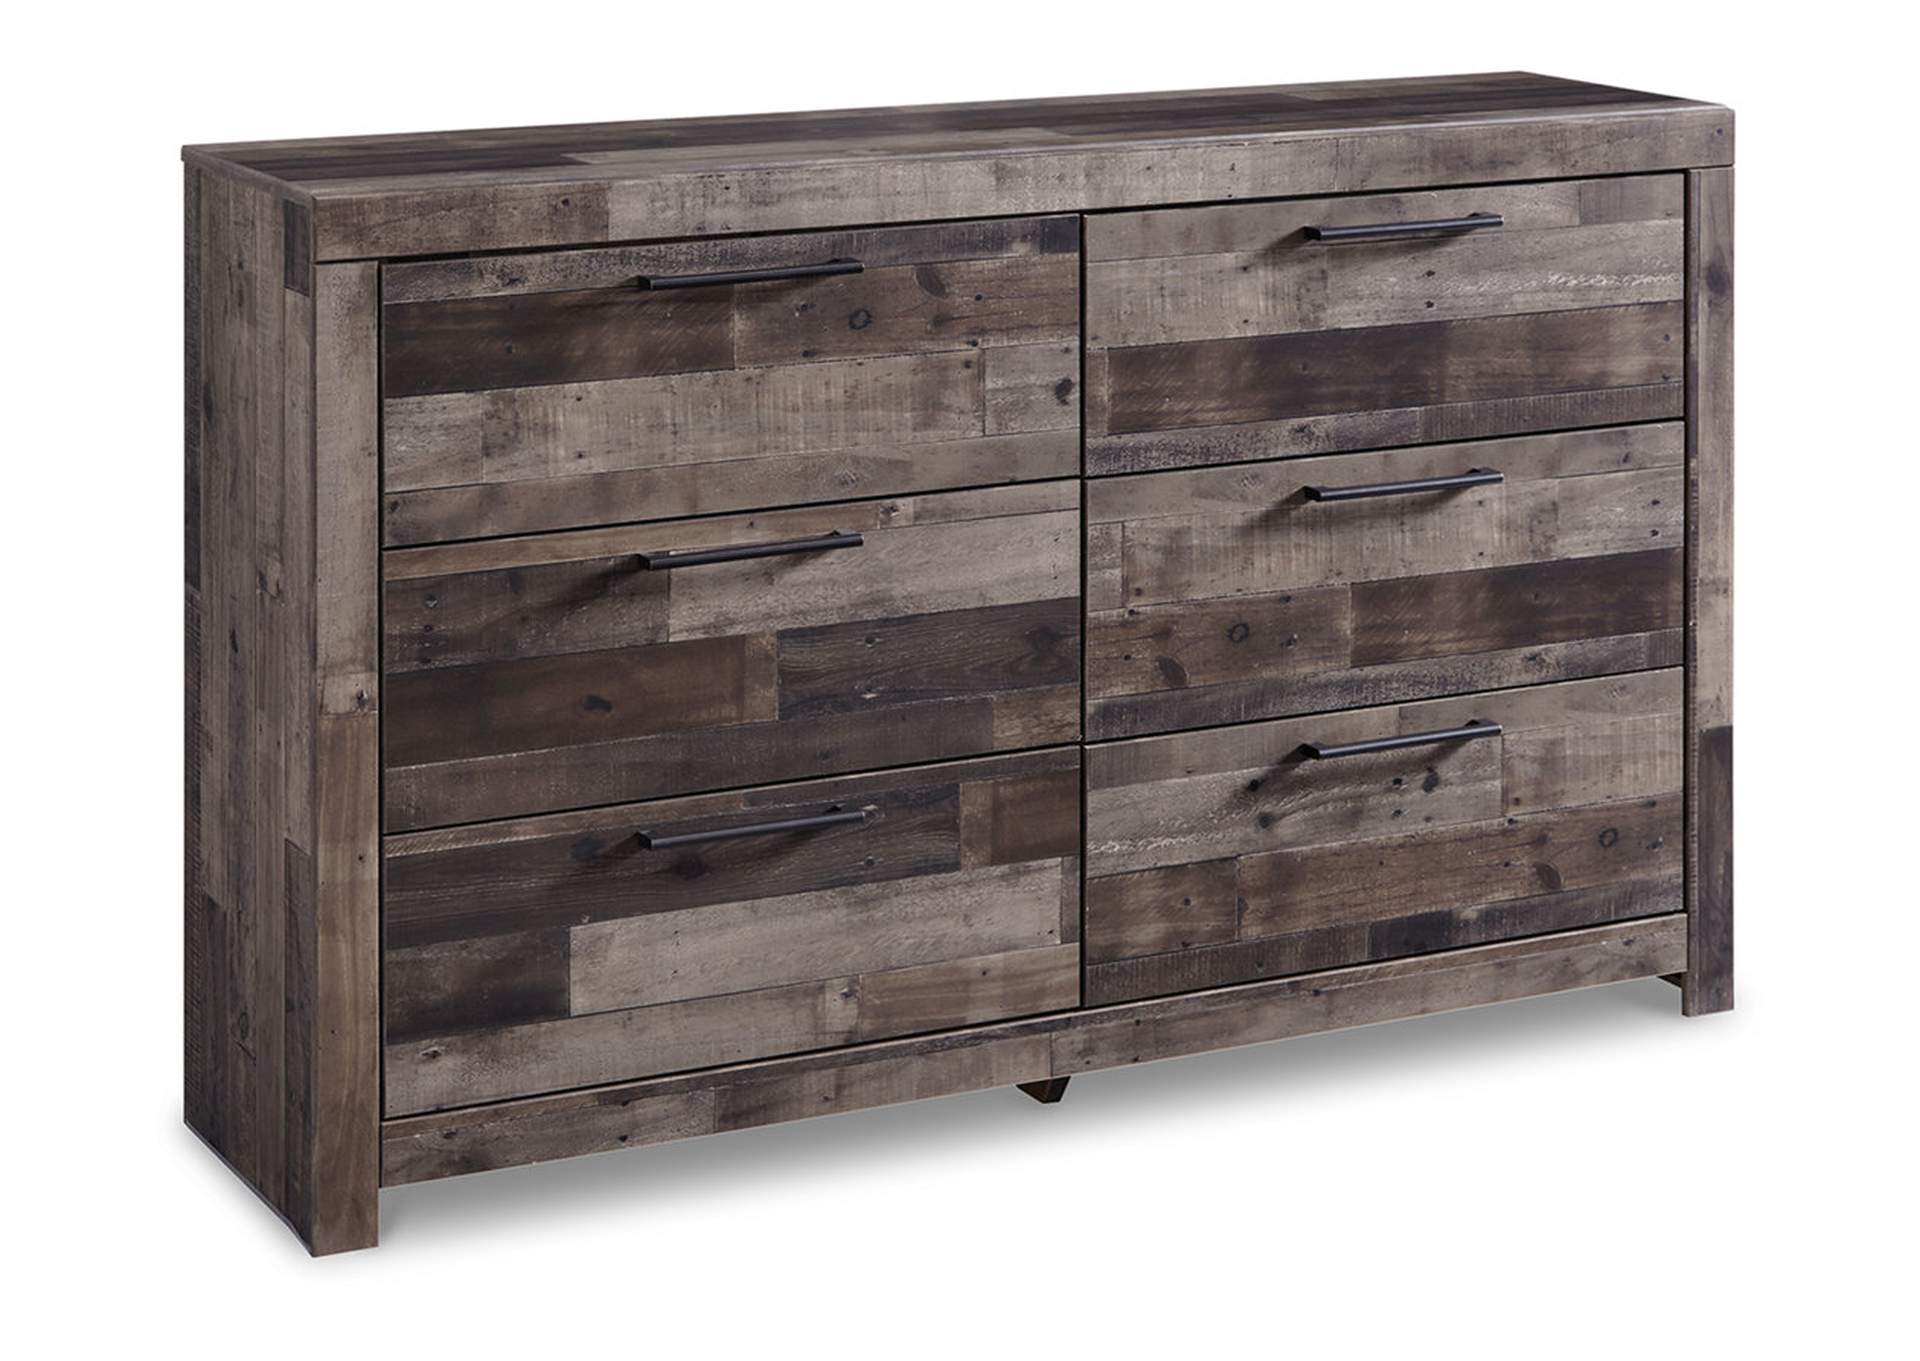 Derekson Full Panel Bed with 2 Storage Drawers with Dresser,Benchcraft